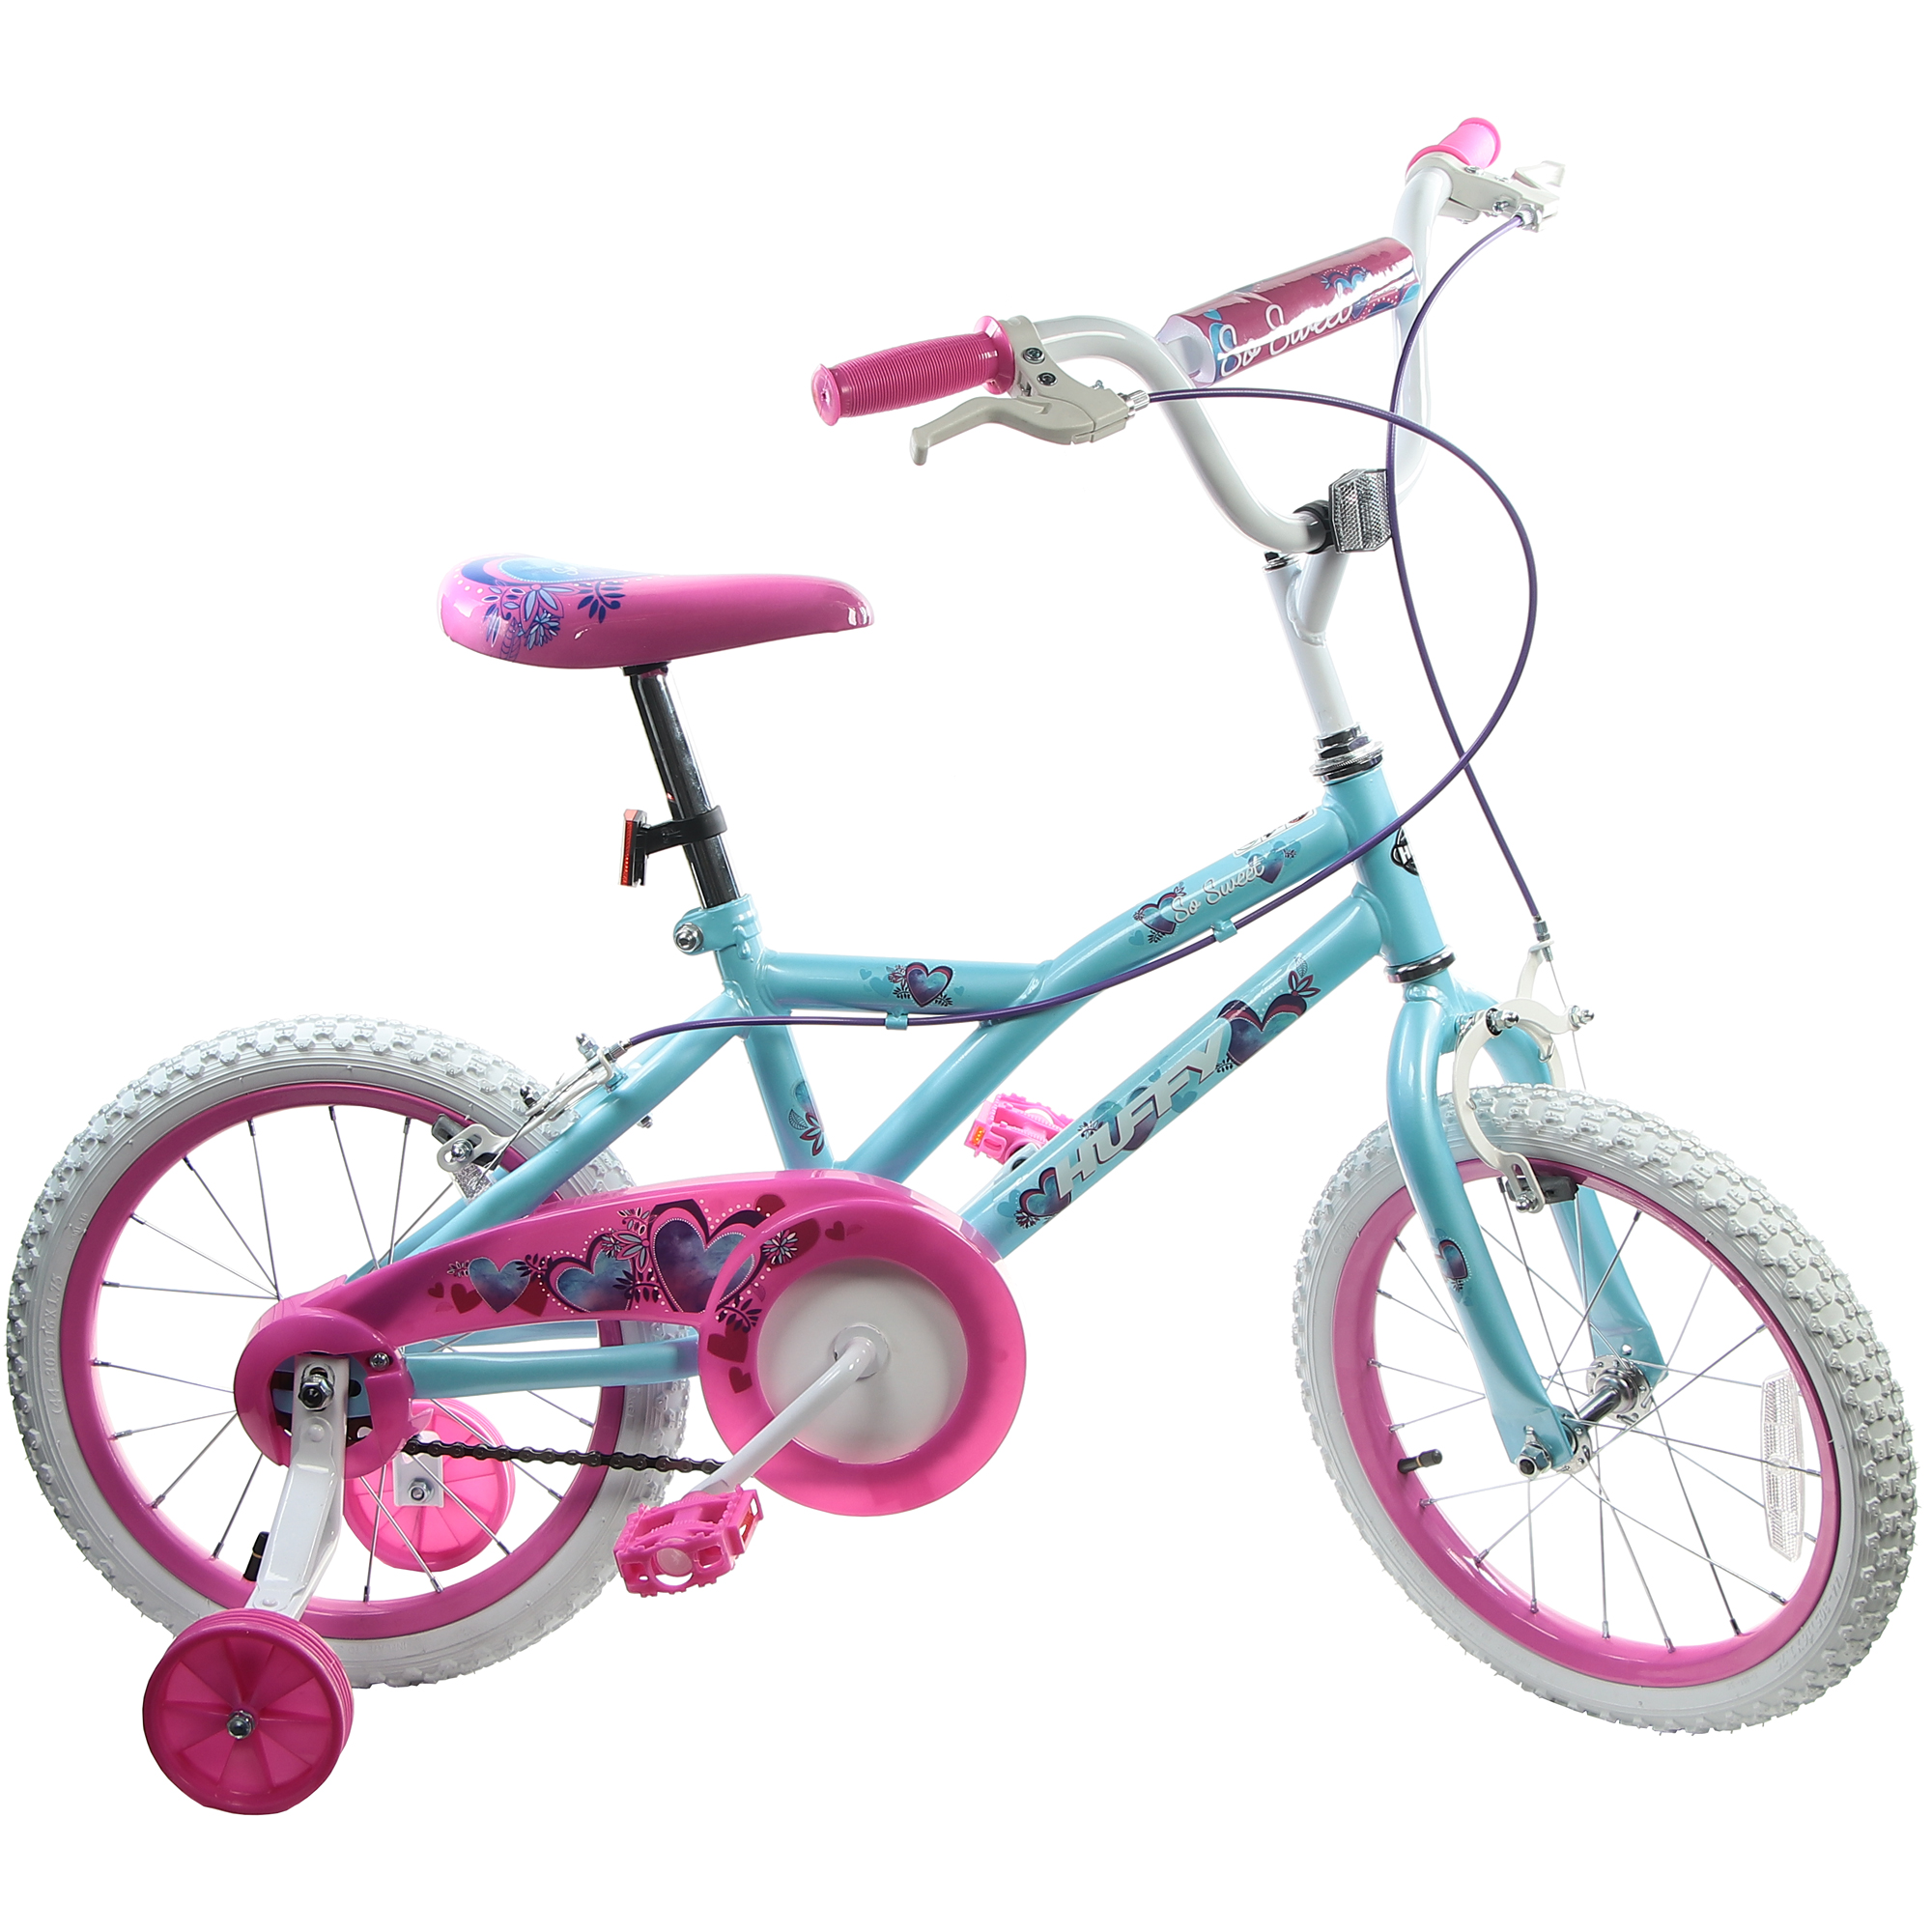 Велосипед детский Huffy So sweet, 16, для девочек велосипед детский huffy so sweet 12 для девочек